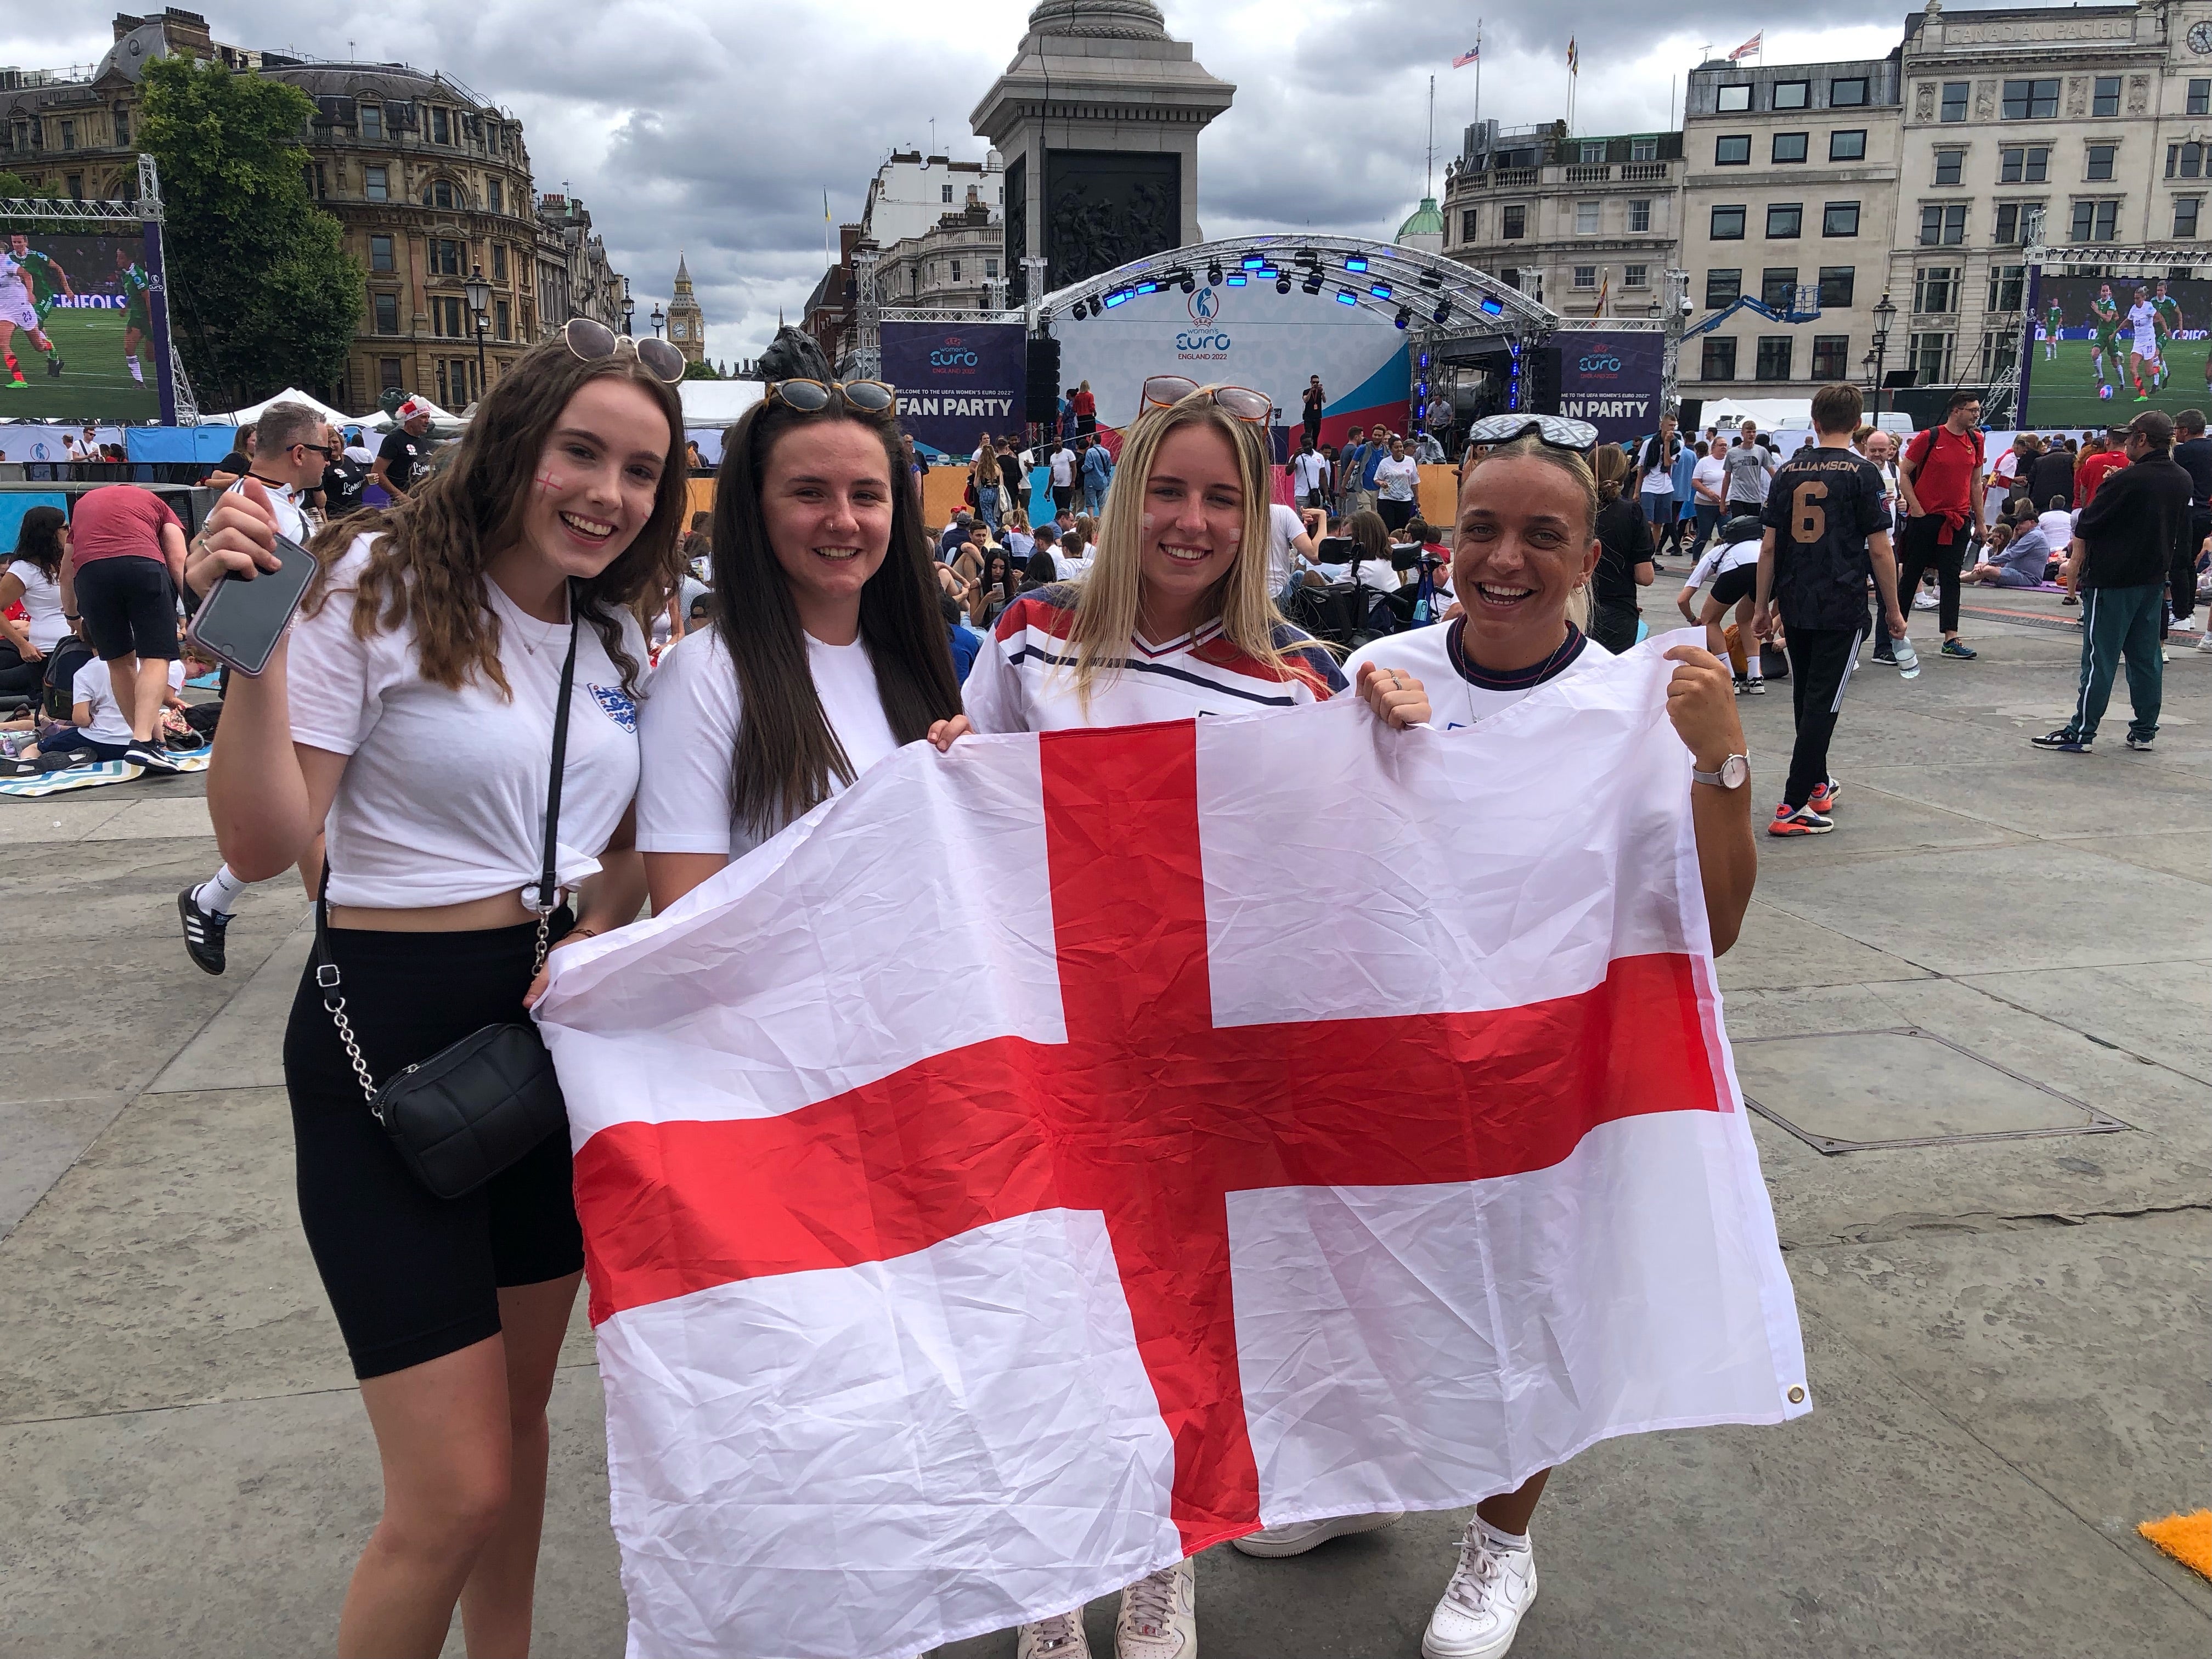 Four friends from Devon support England in Trafalgar Square